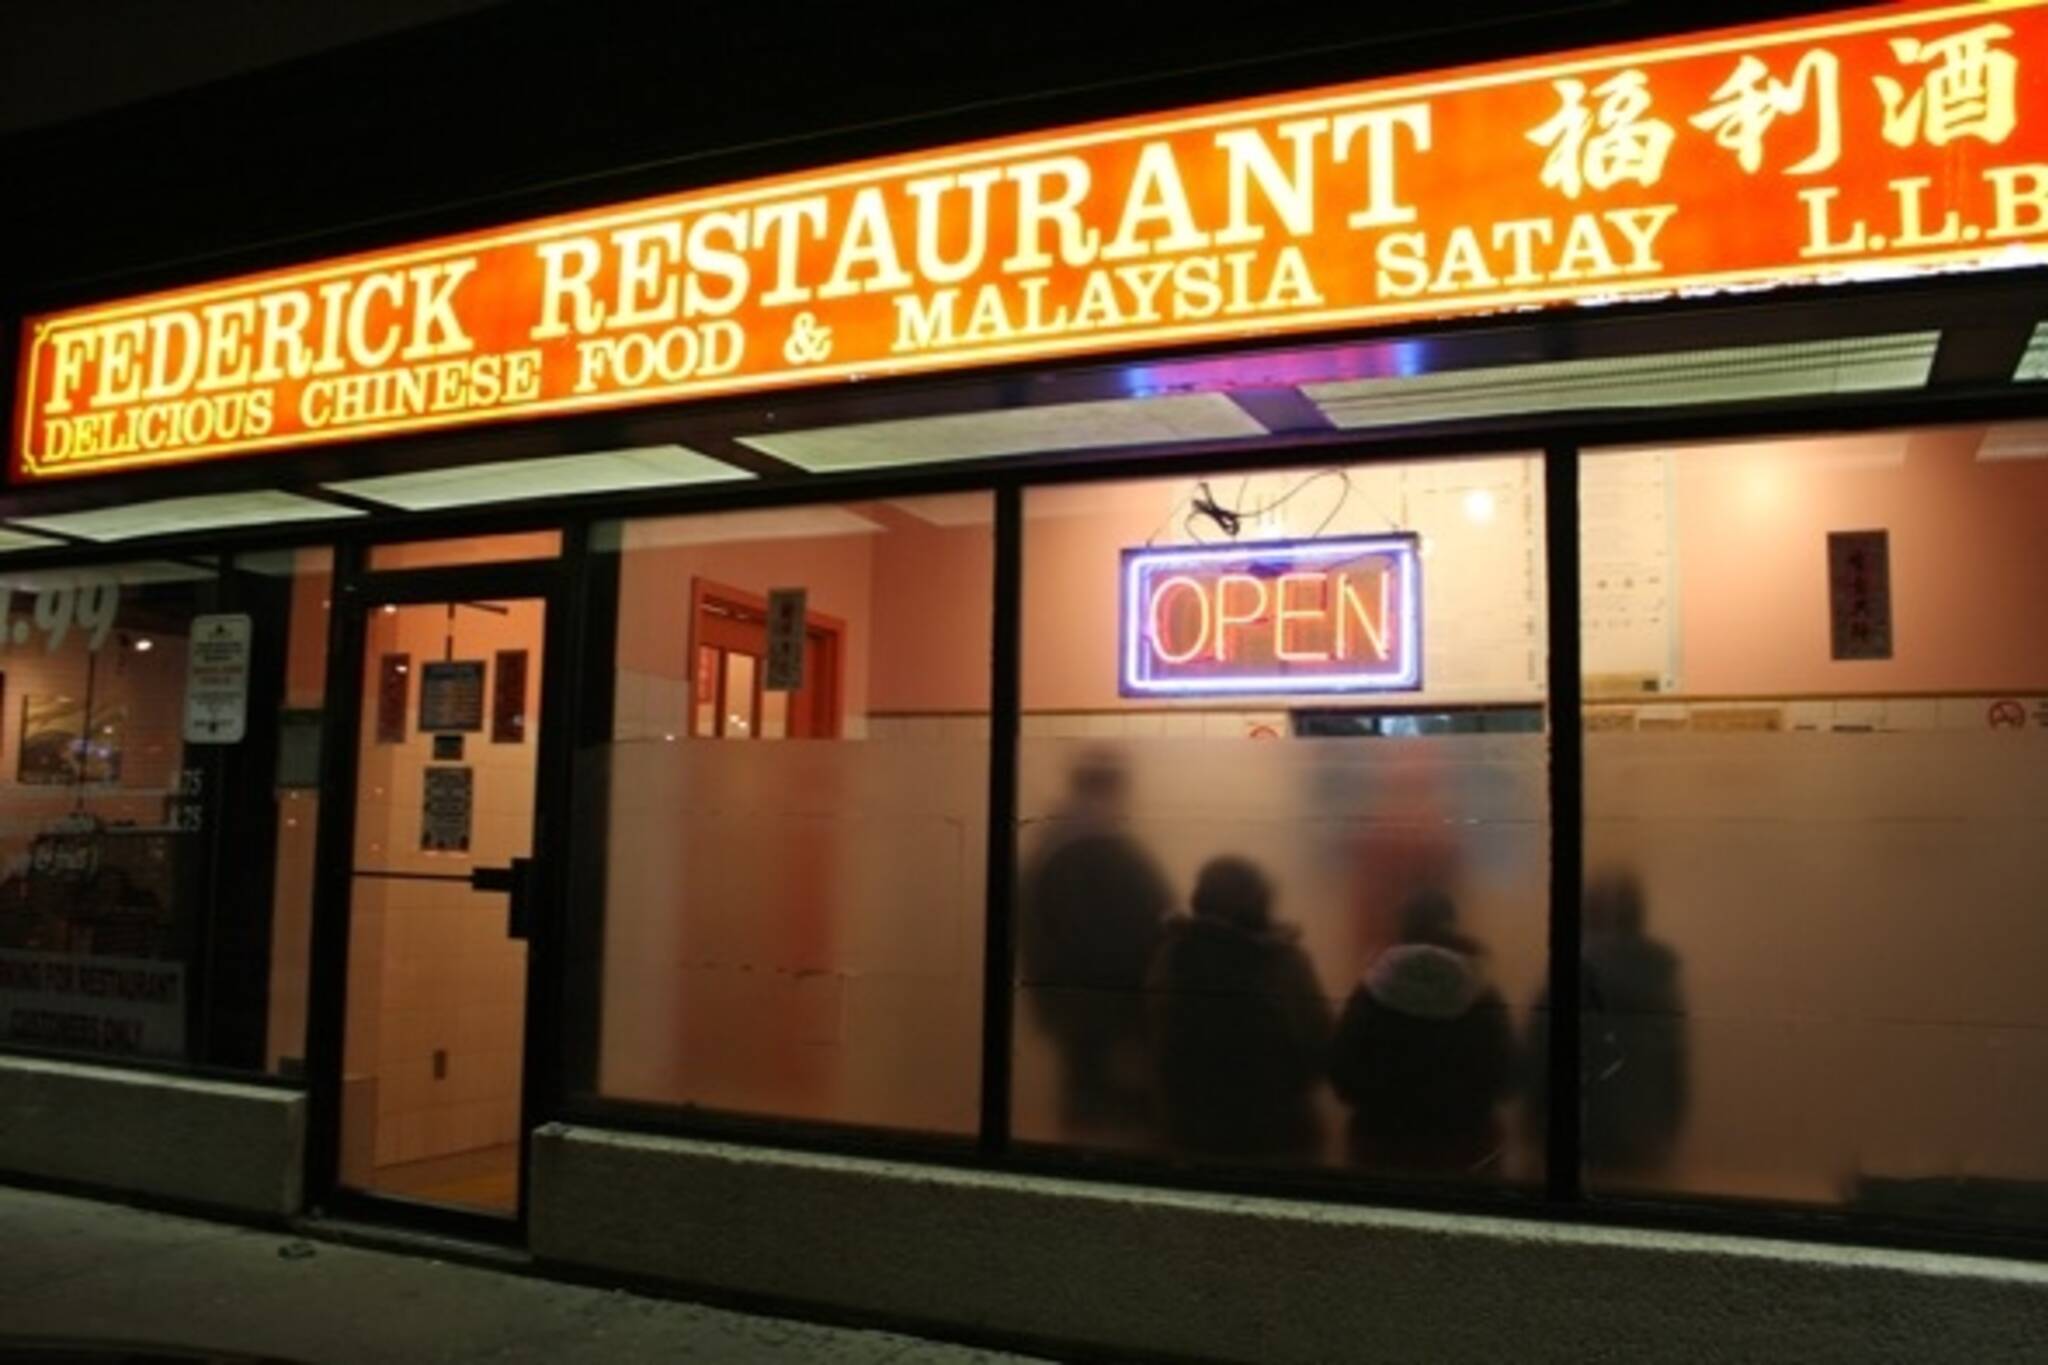 Frederick Restaurant